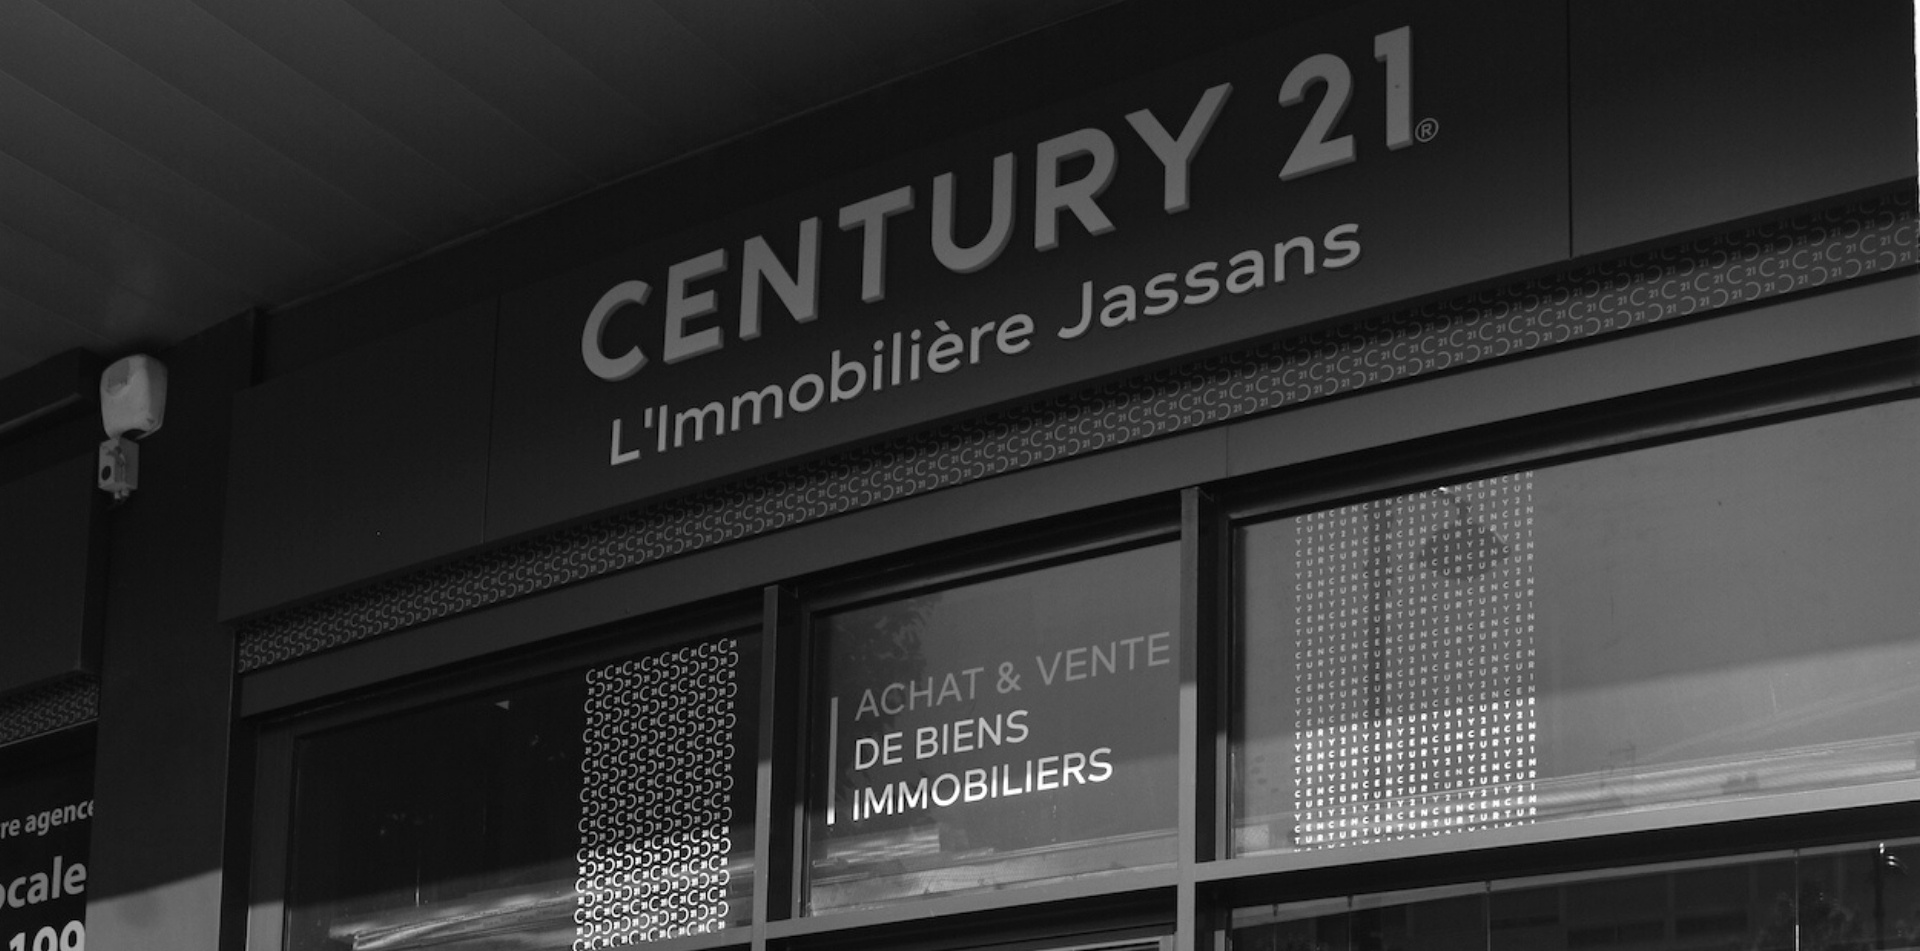 Century 21 Jassans - Devanture